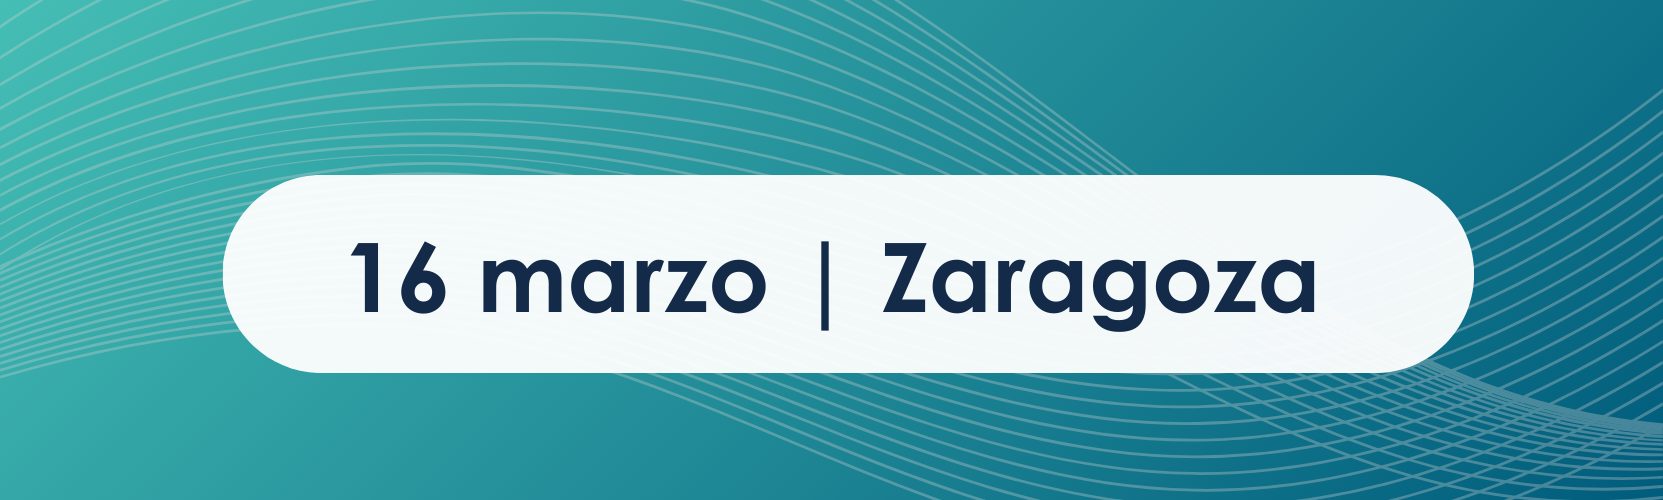 Curso Zaragoza